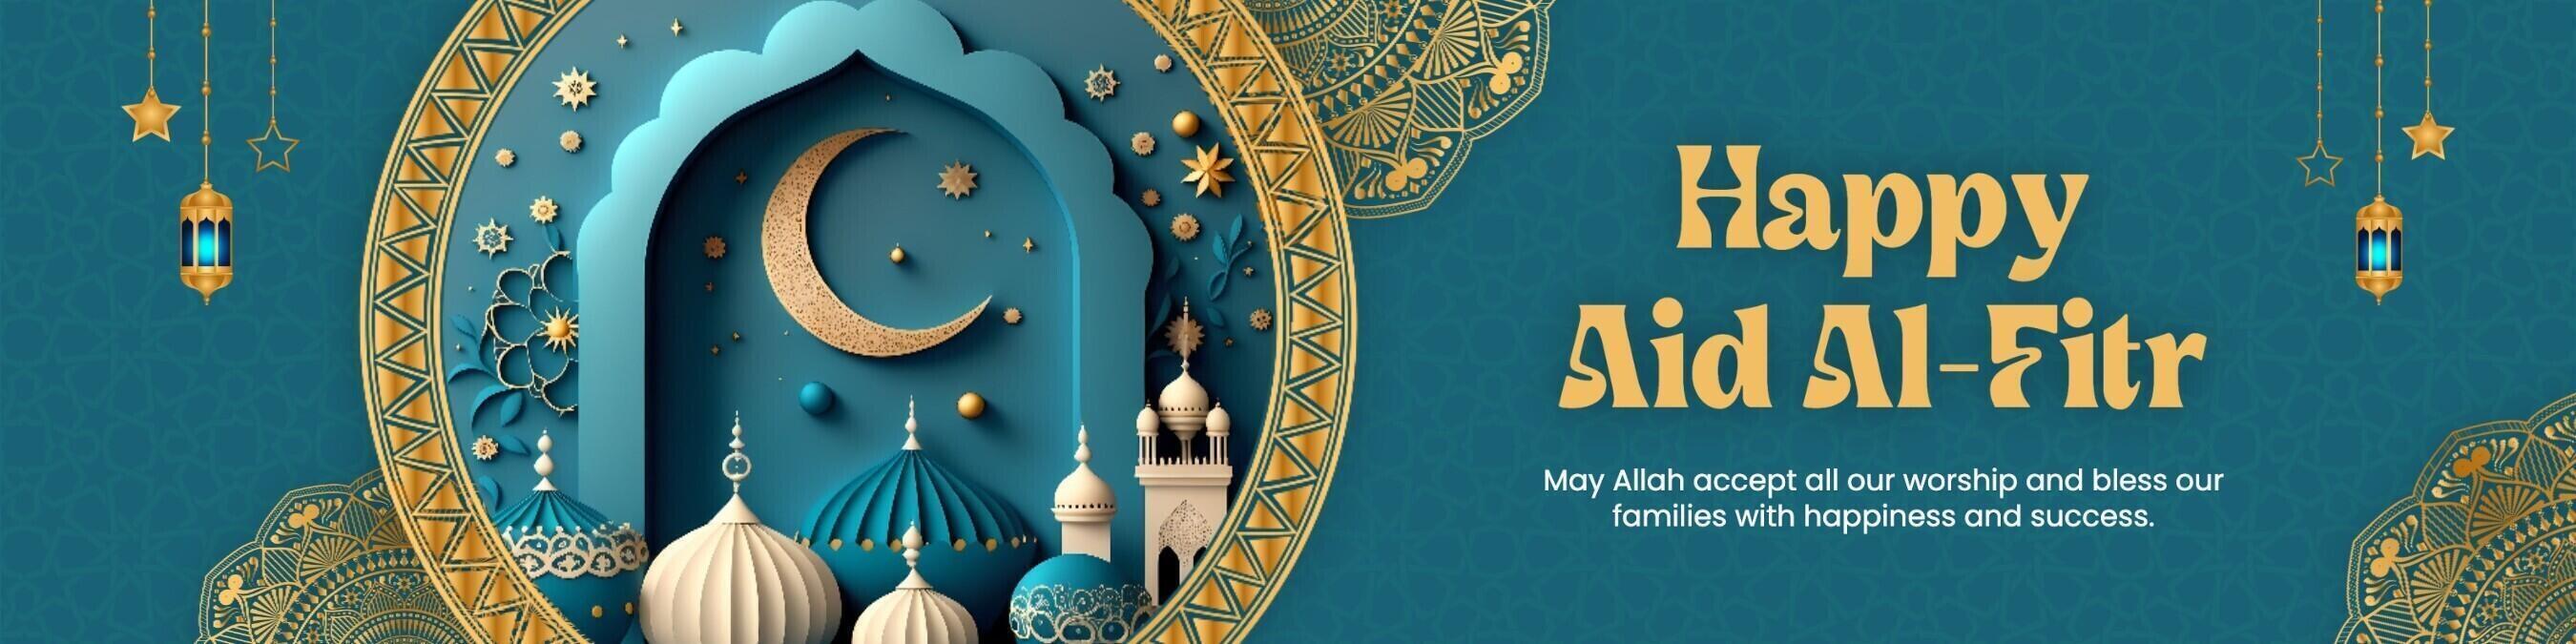 blue elegant eid al-fitr greeting linkedin banner template